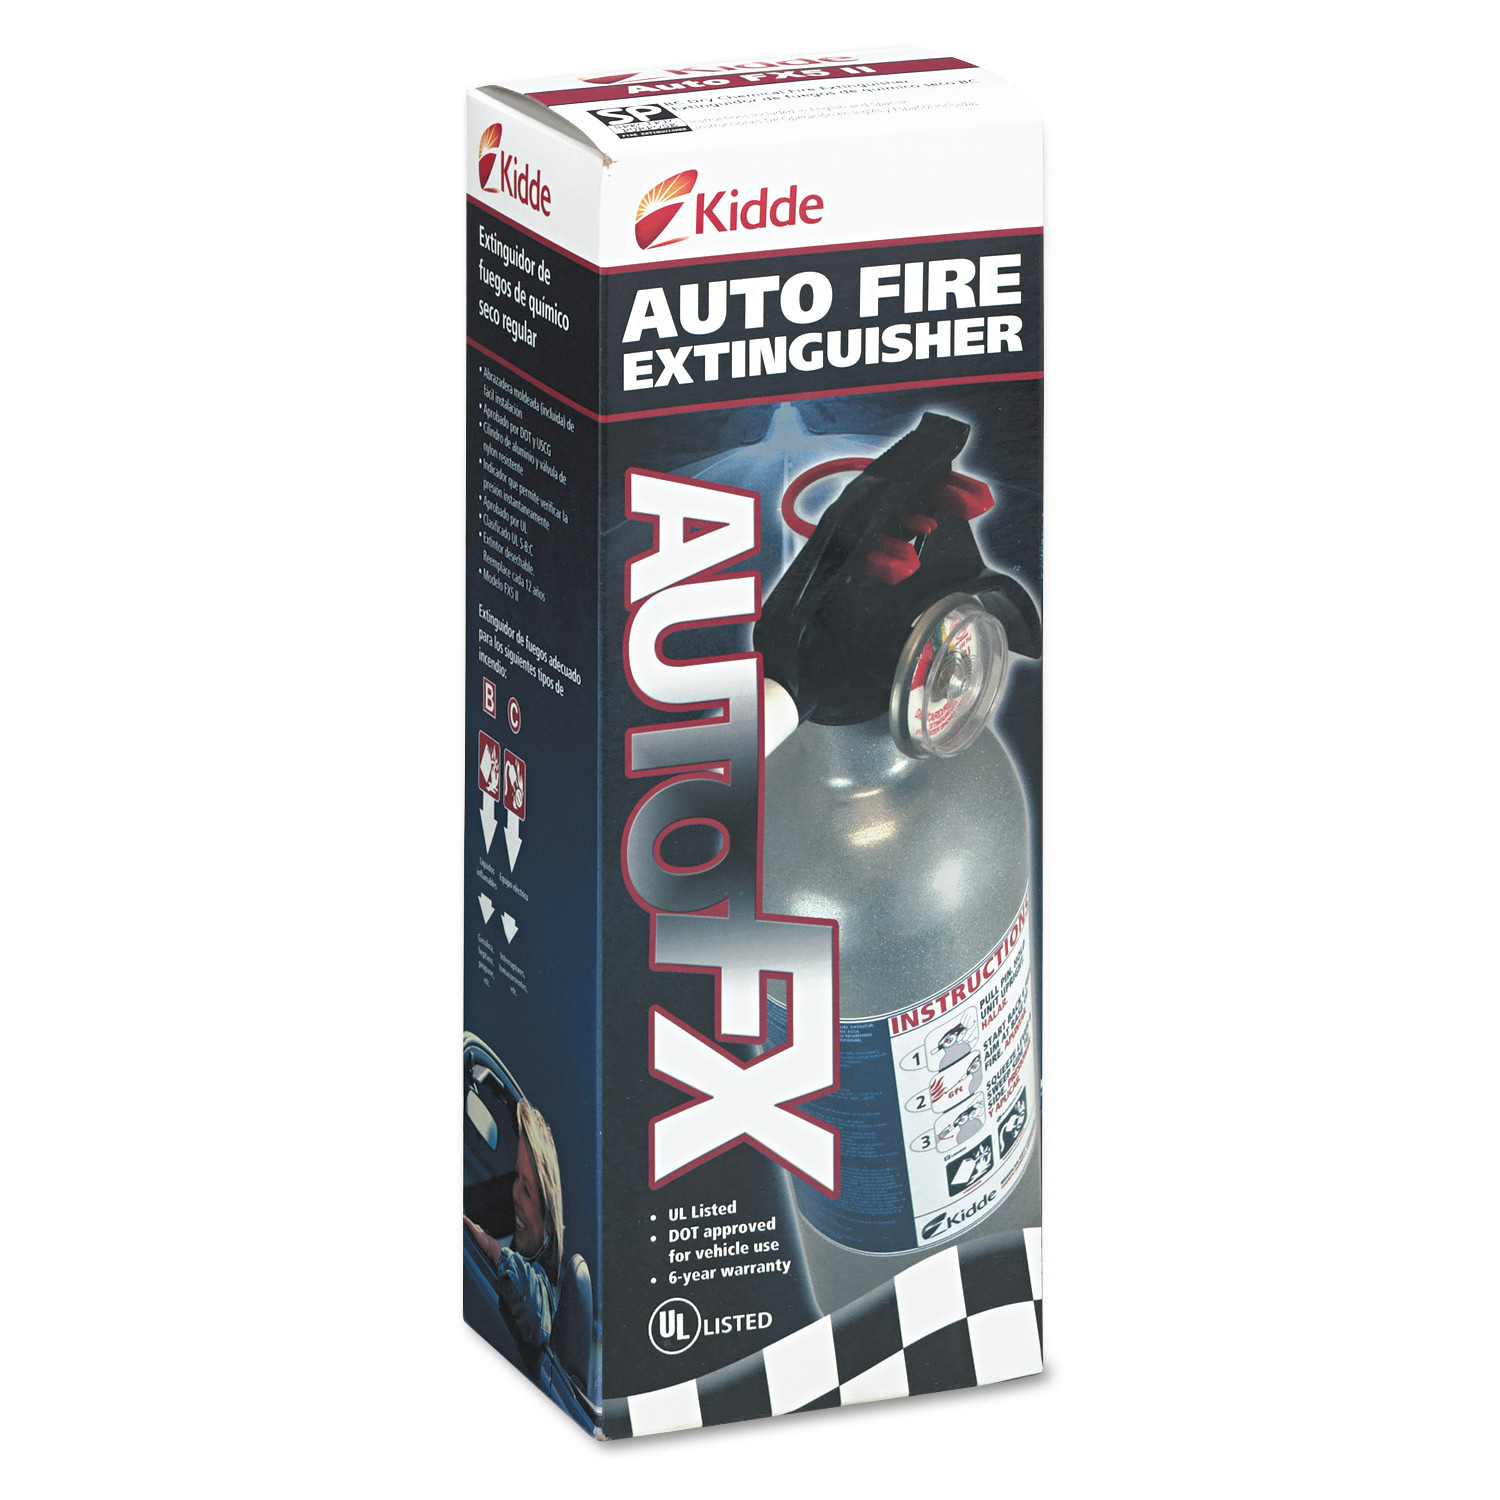 Kidde Auto Fire Extinguisher - image 2 of 5